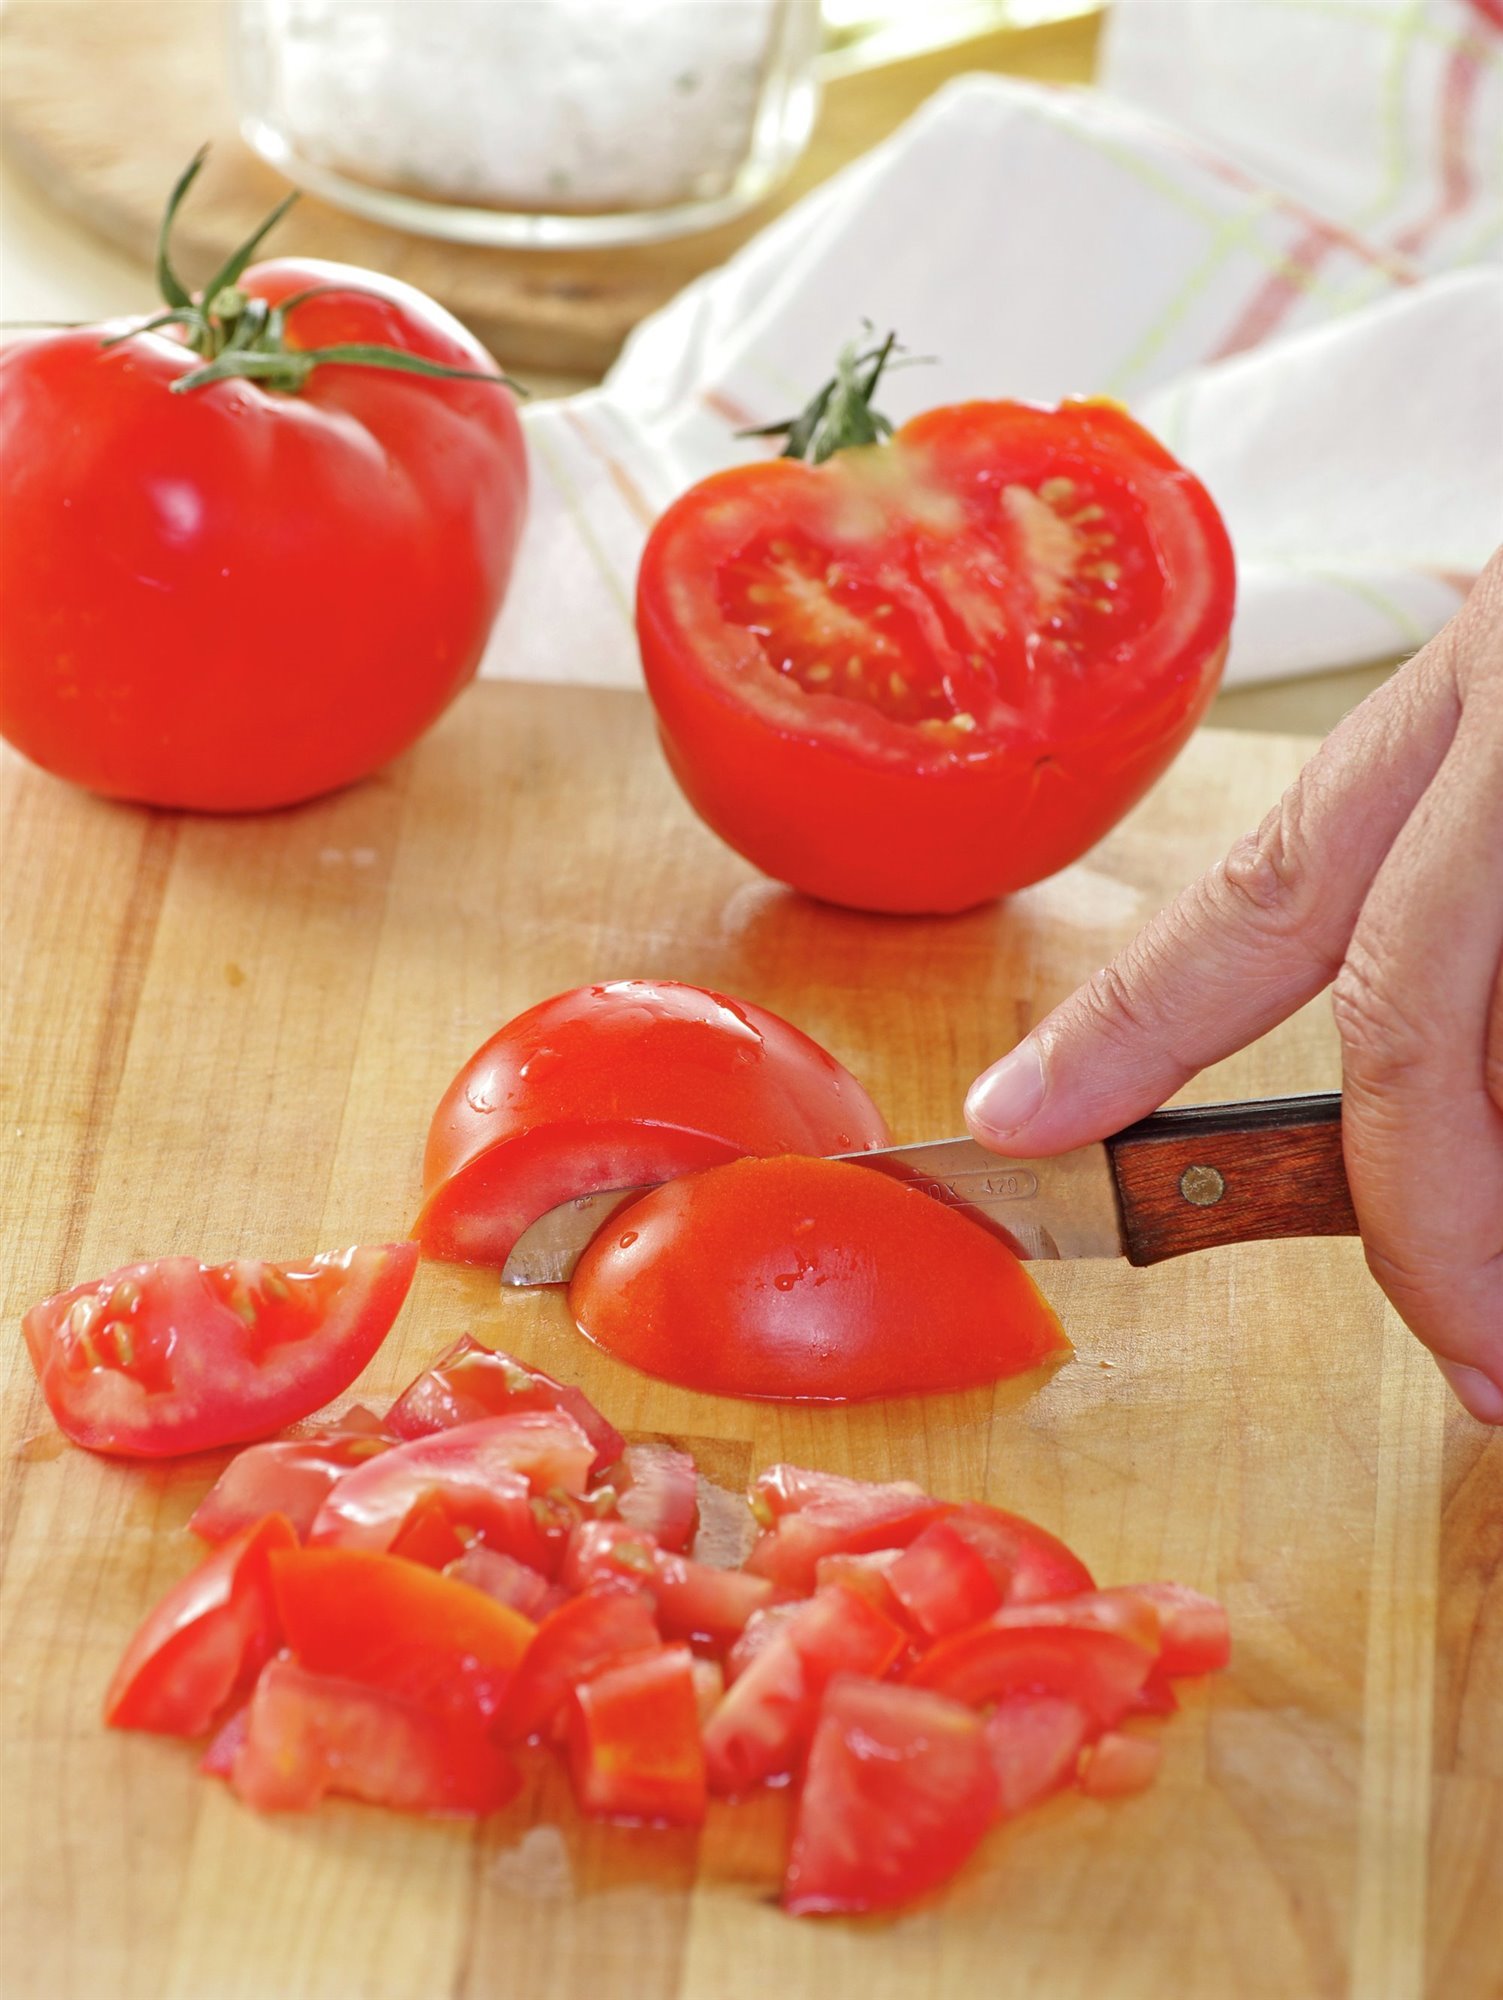 3. Trocea el tomate